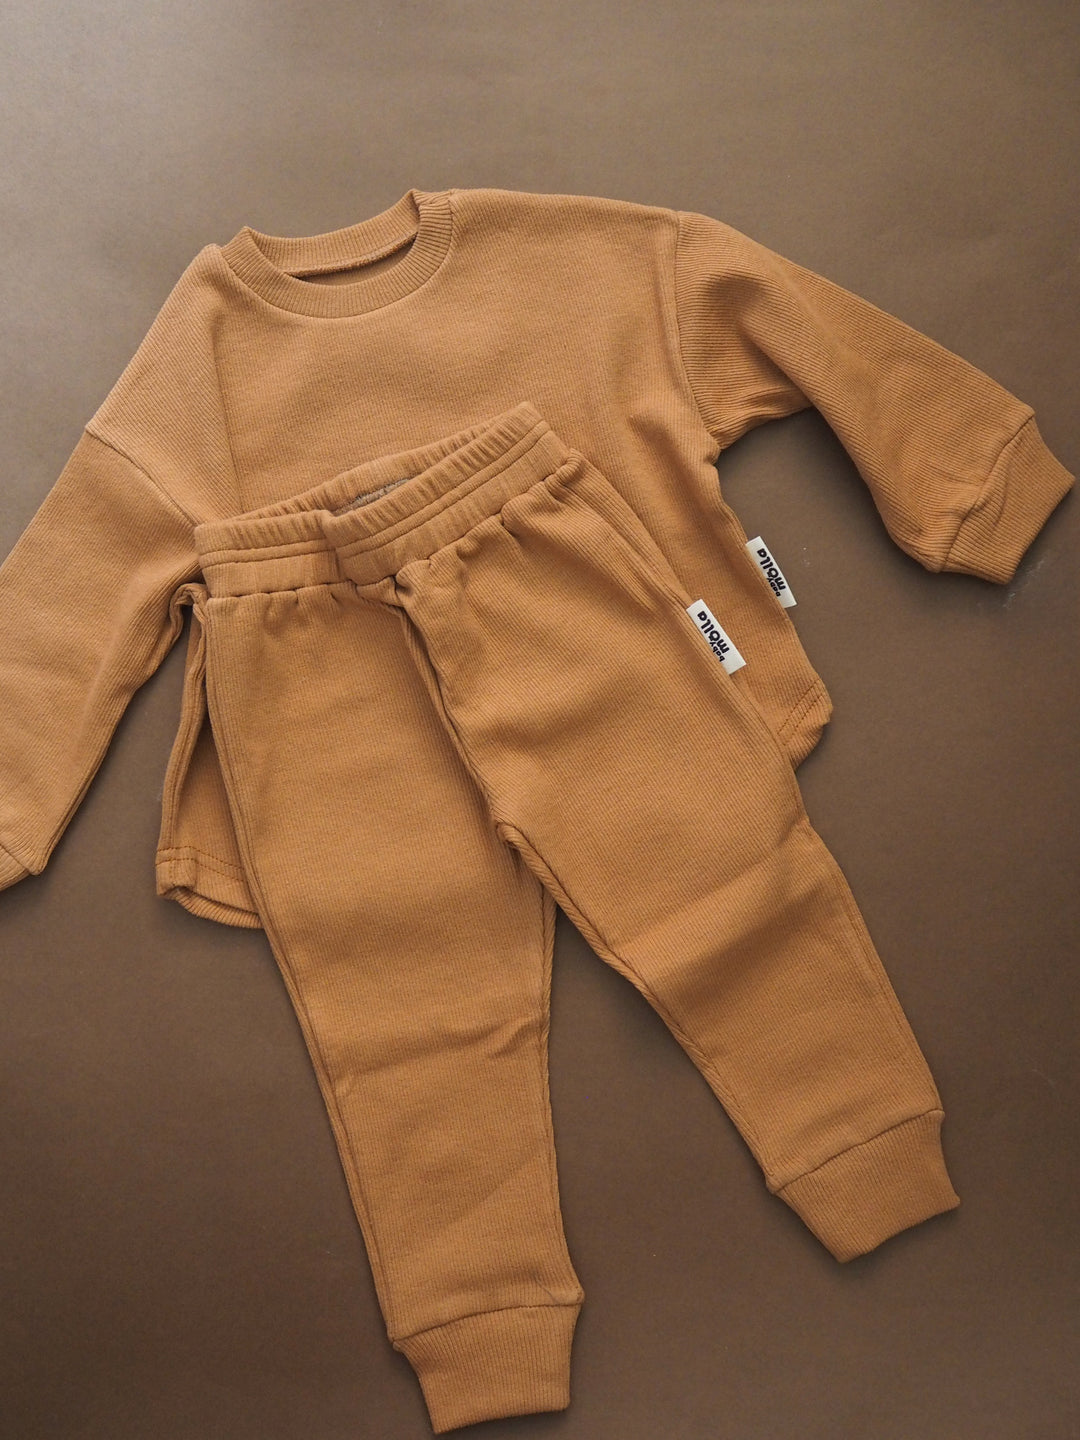 Brown - Bluzë dhe pantolone (set)